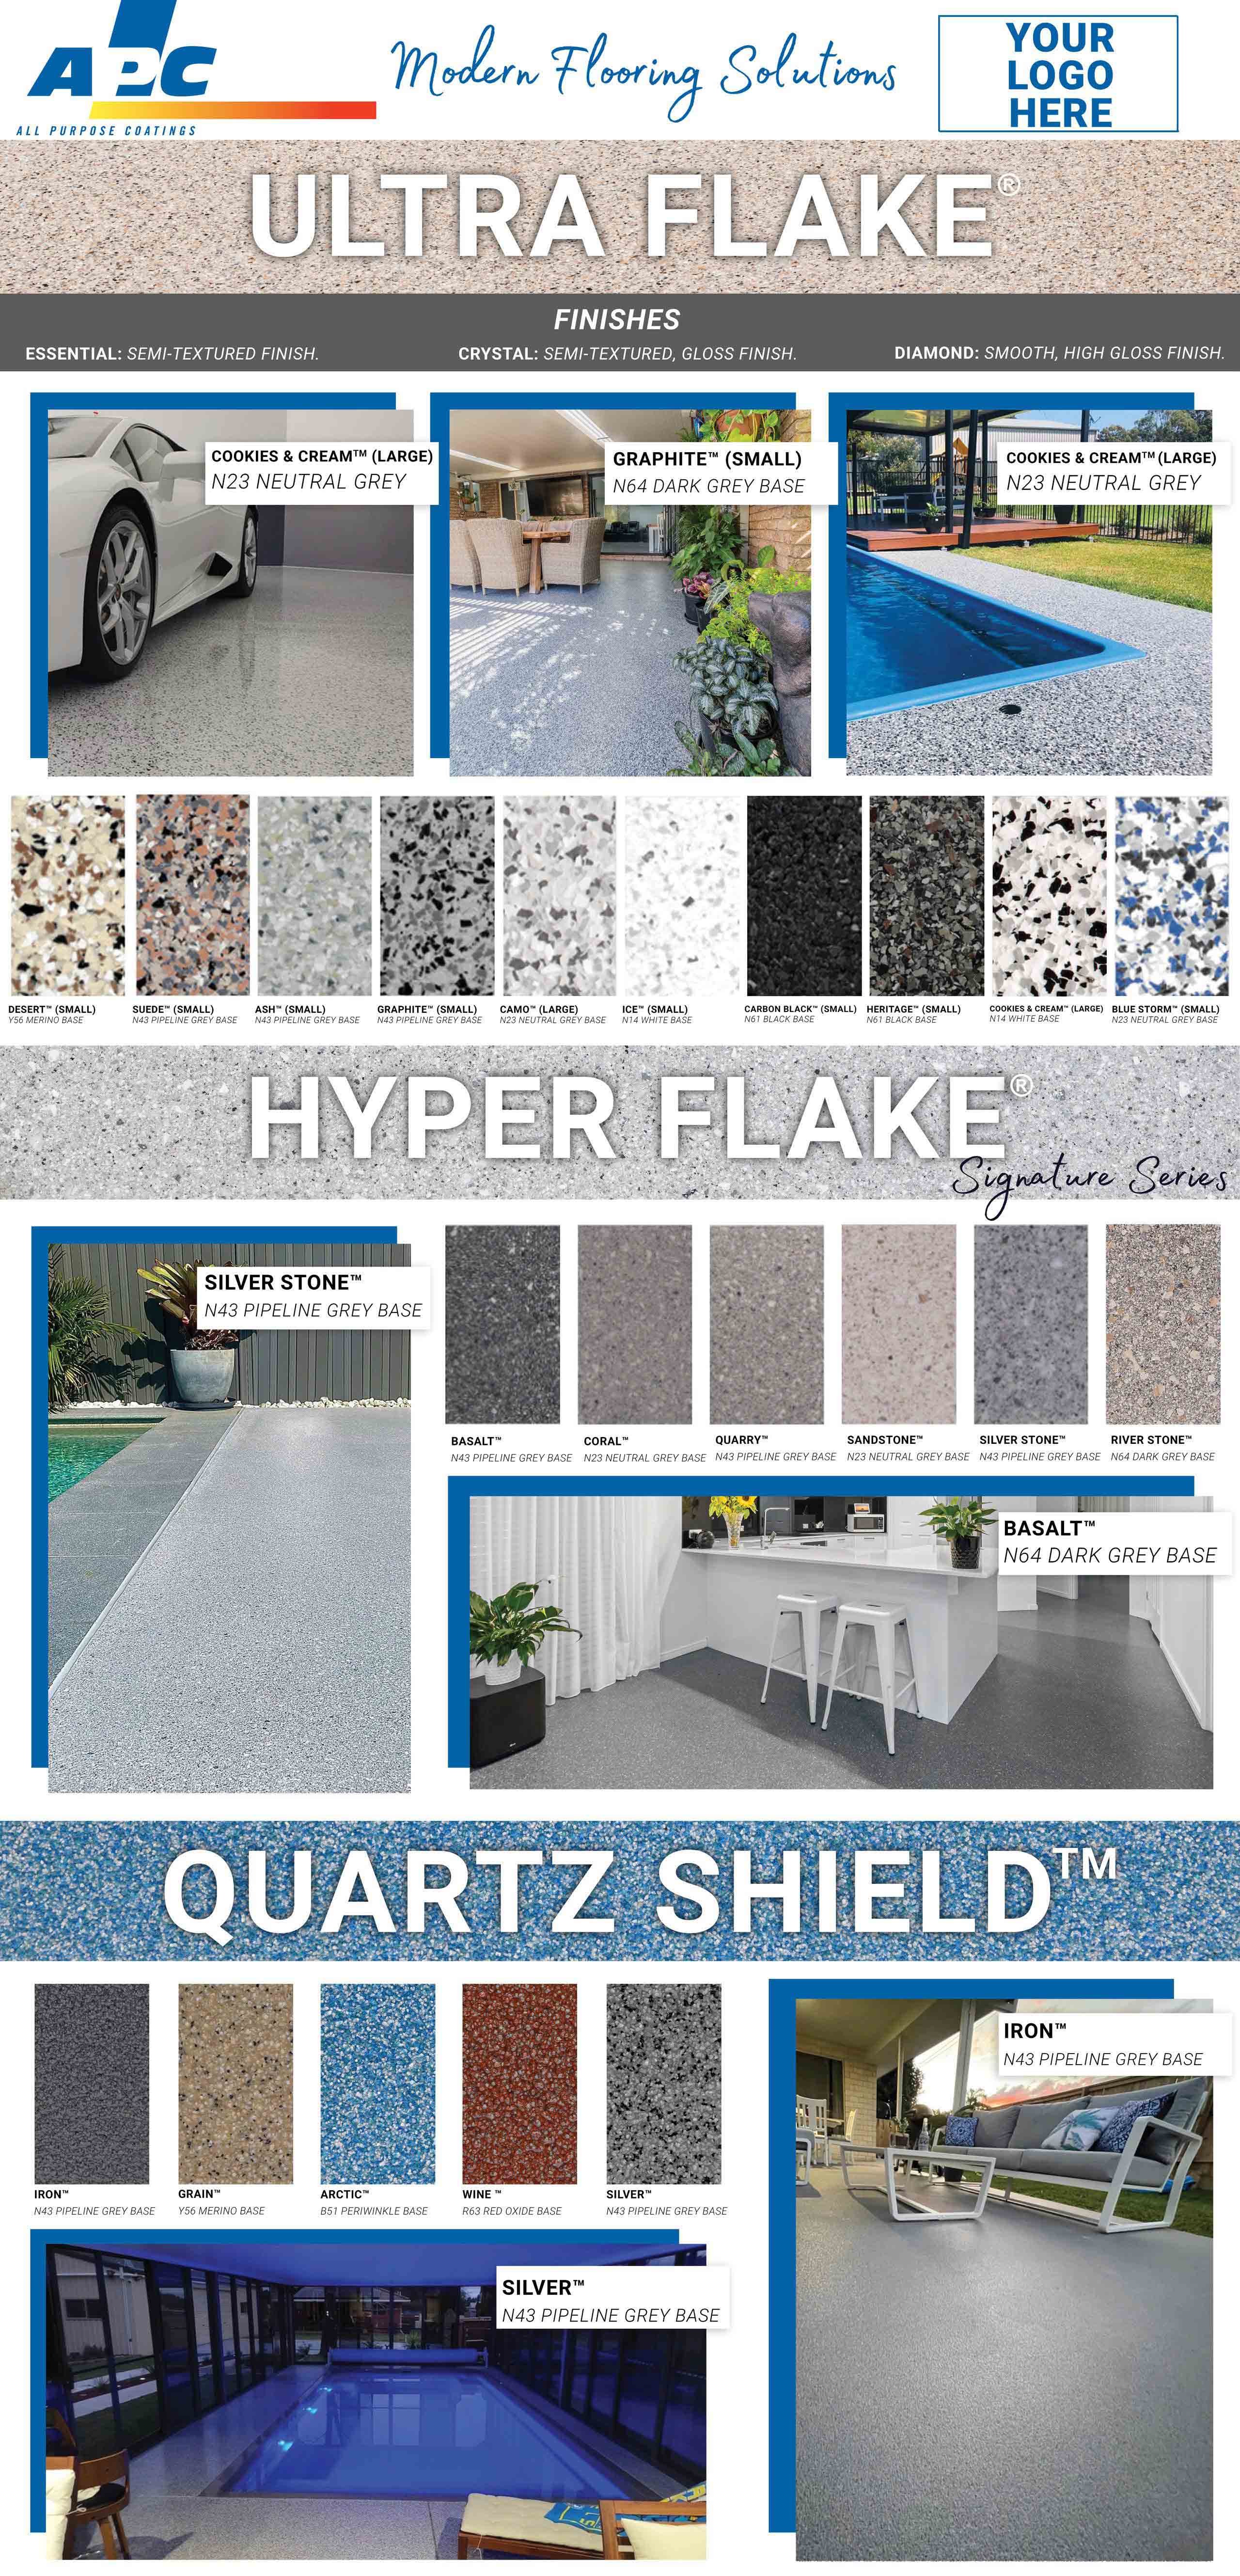 Builders Board - Ultra Flake, Hyper Flake & Quartz Shield 65cm x 135cm